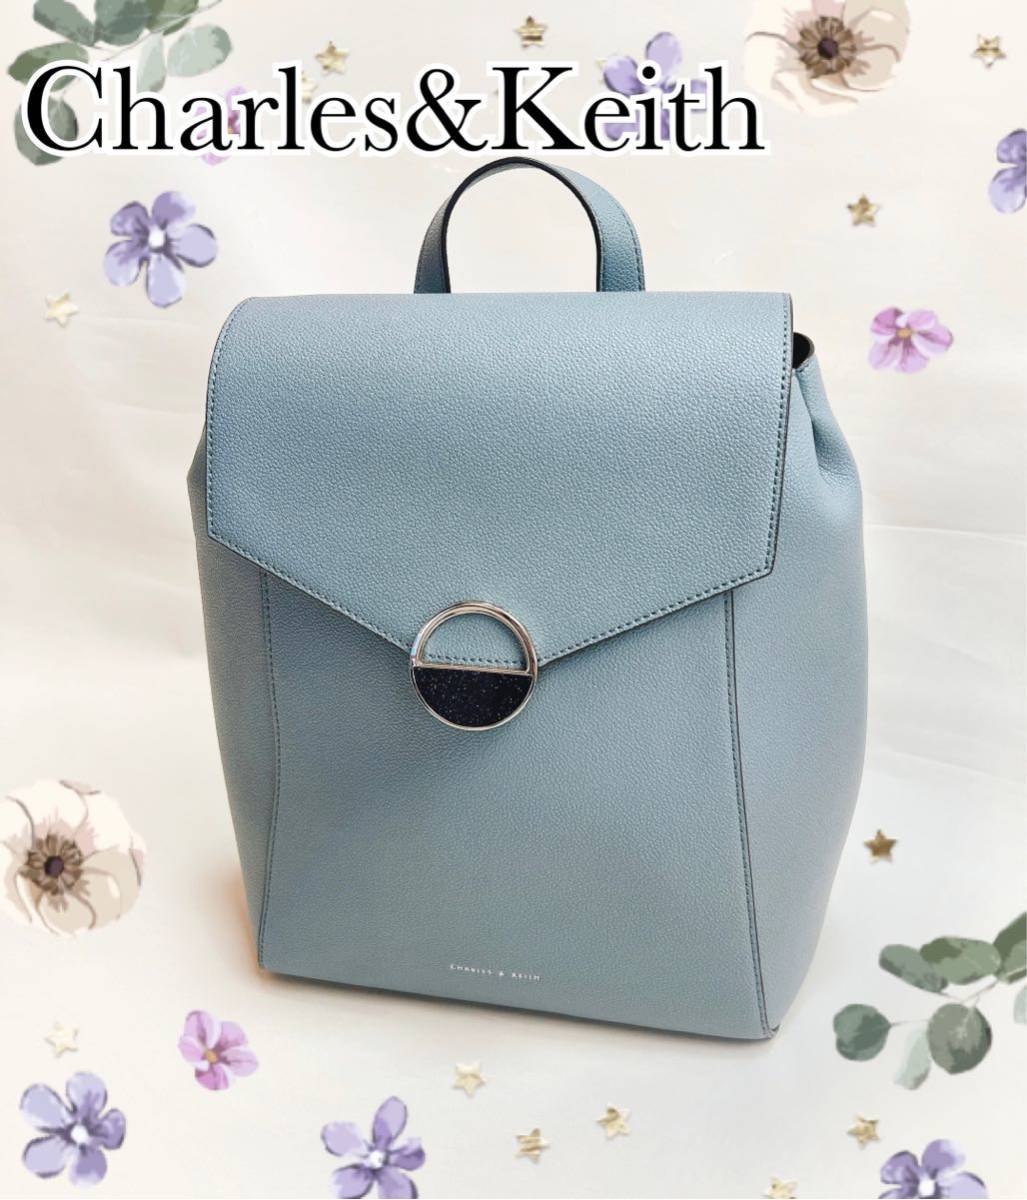 Charles&Keith Charles and Keith rucksack backpack blue rucksack lady's bag 